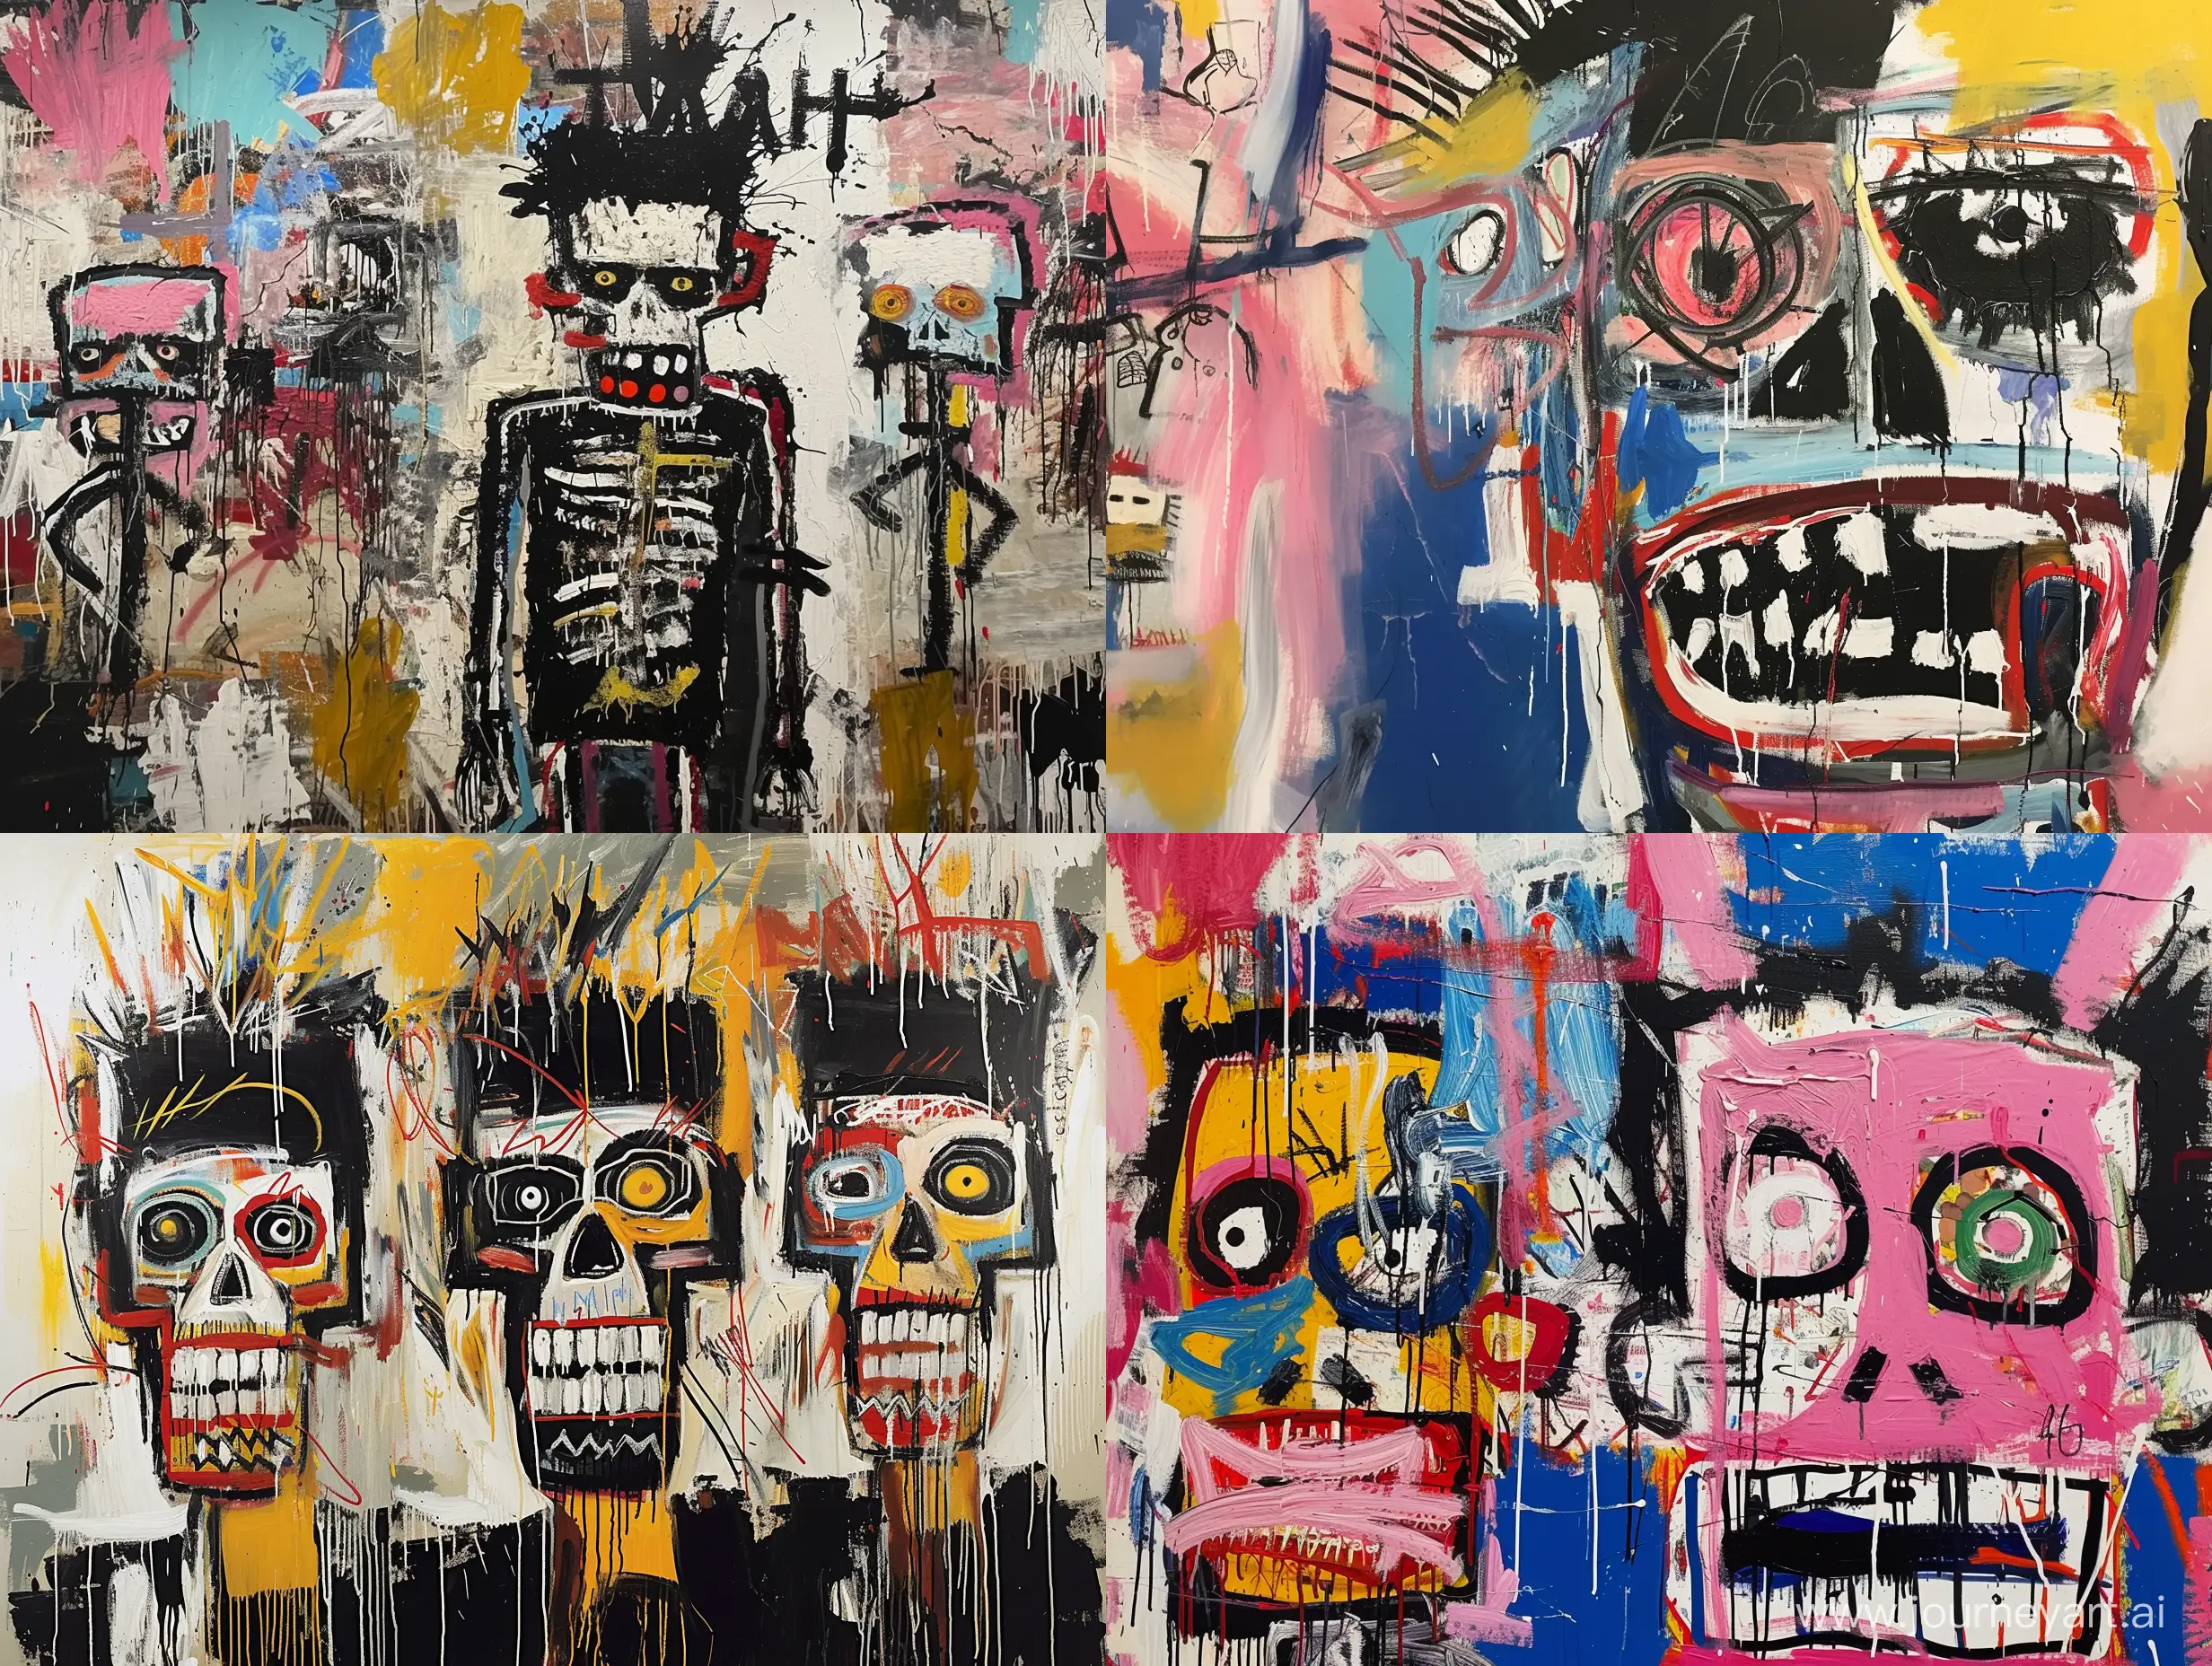 AwardWinning-Realistic-Painting-in-JeanMichel-Basquiat-Style